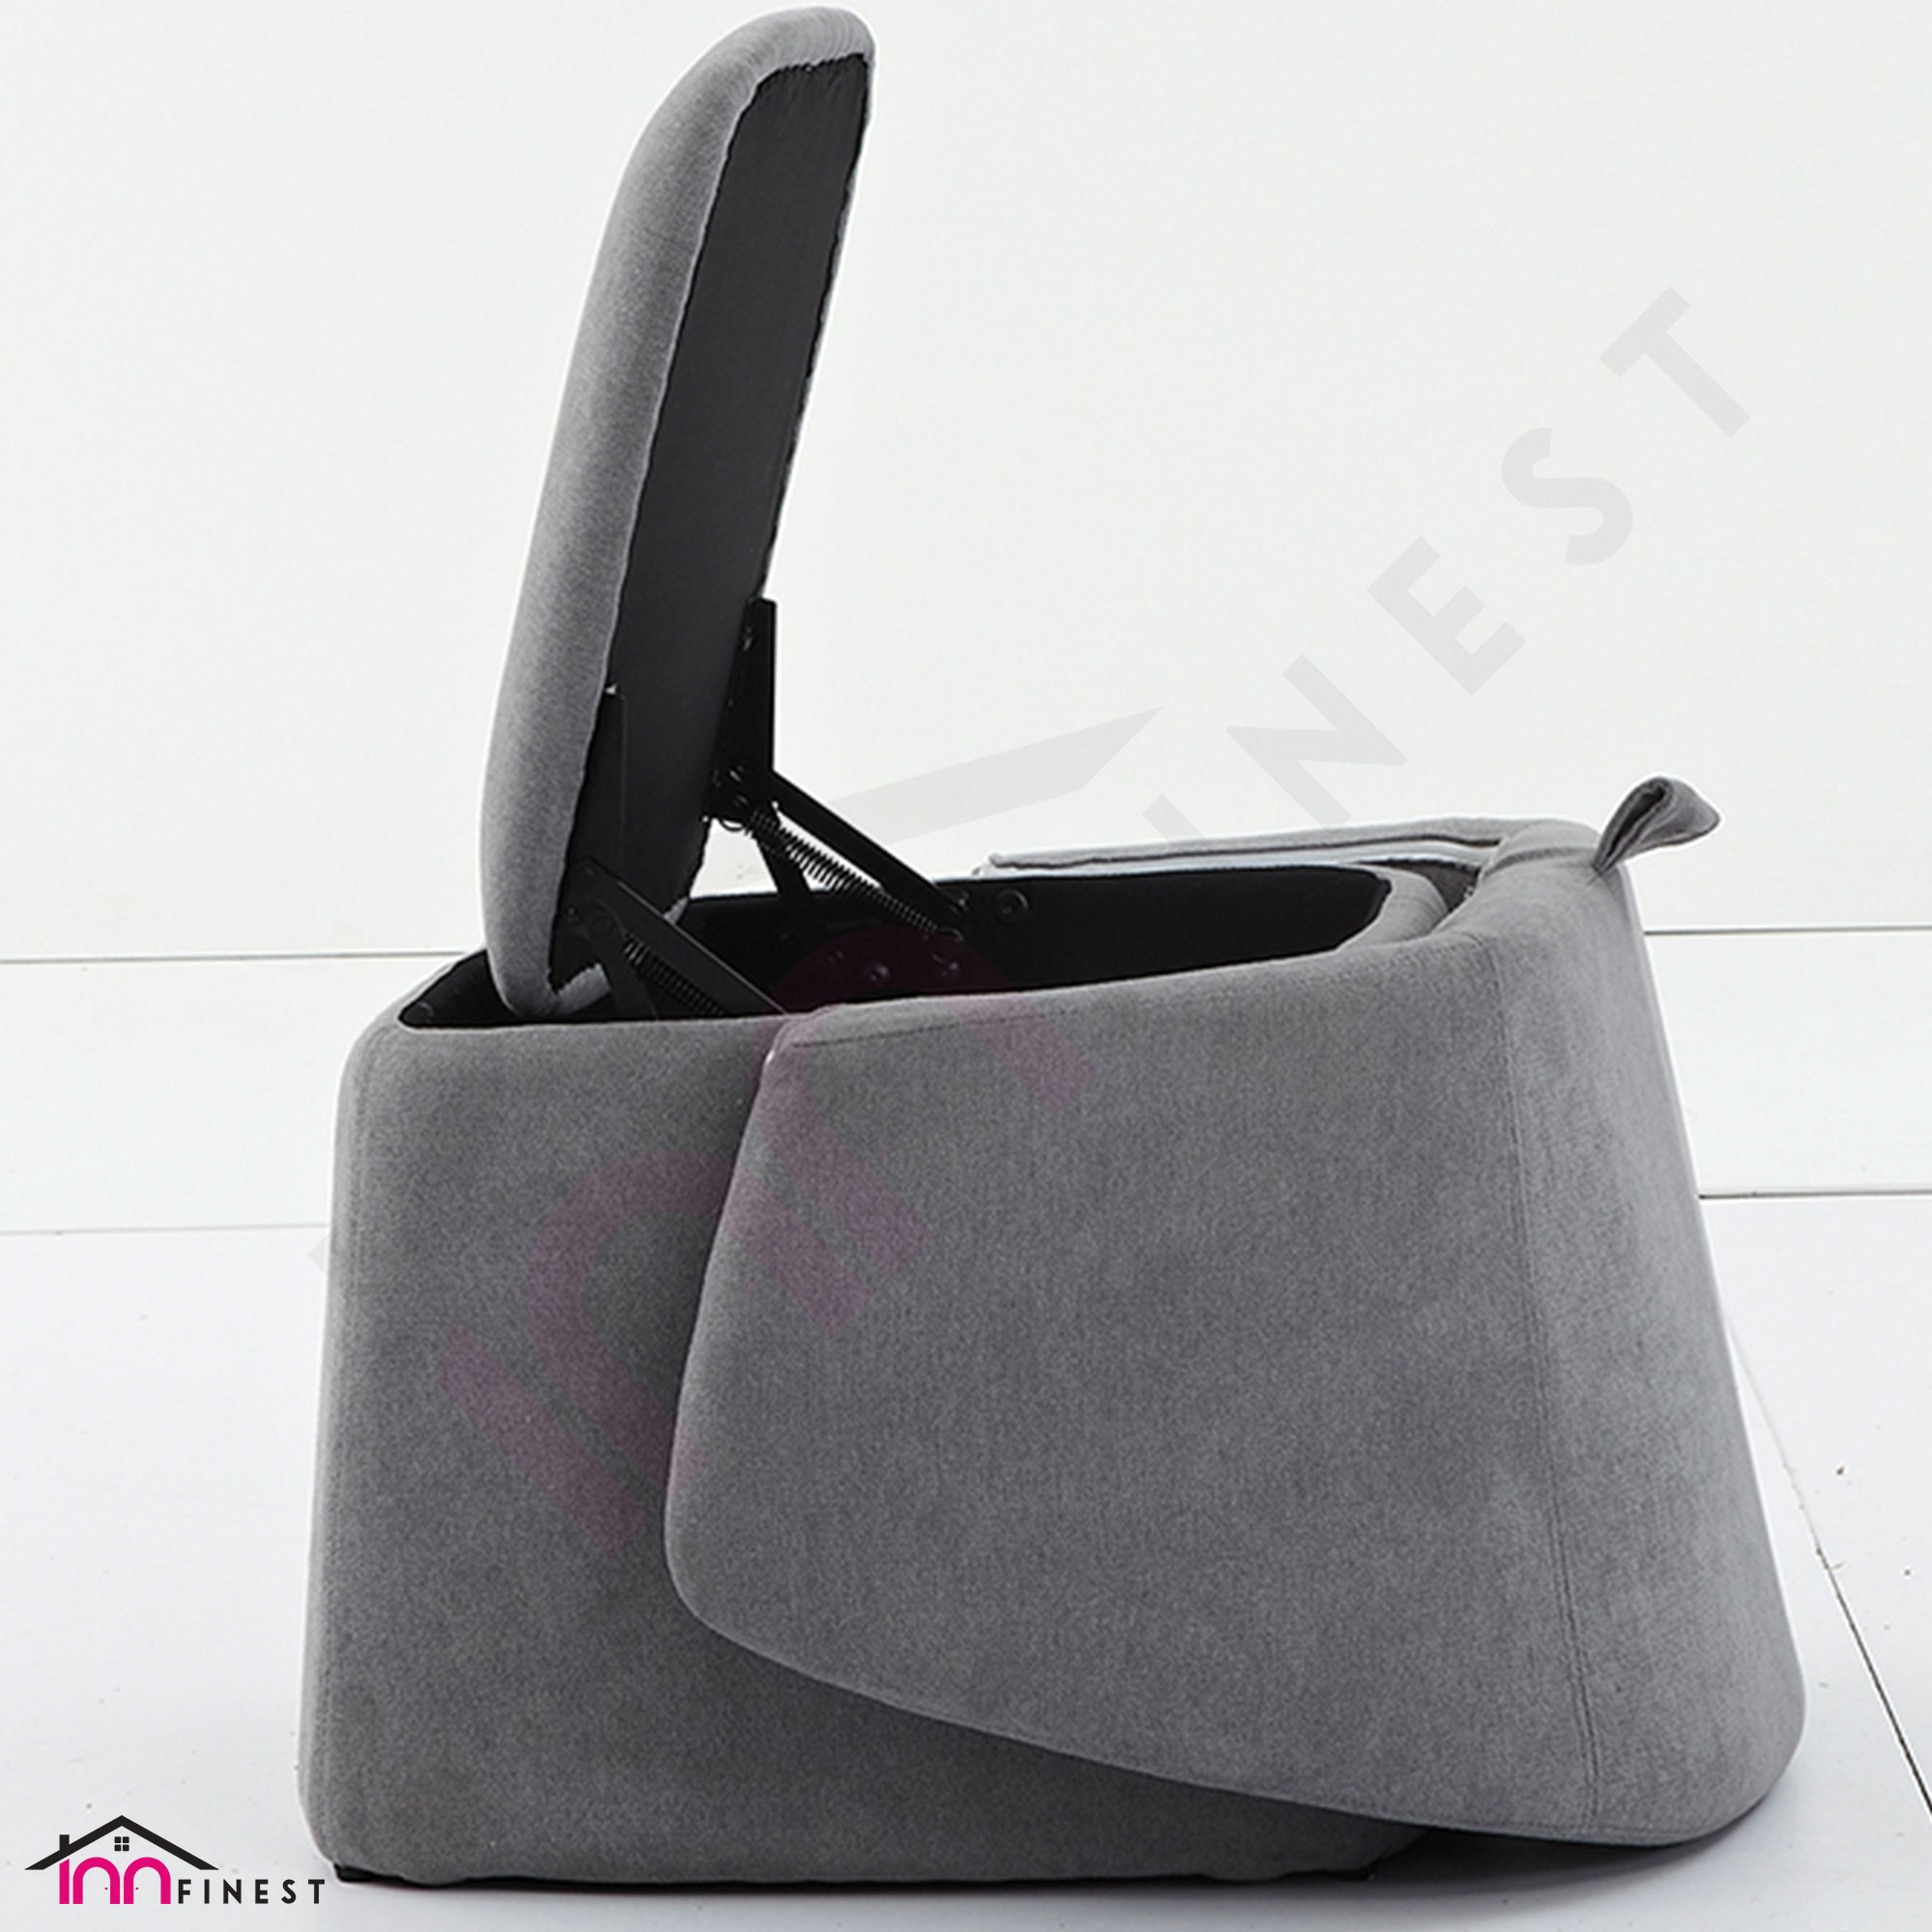 foldable sofa storage chair high quality space saving